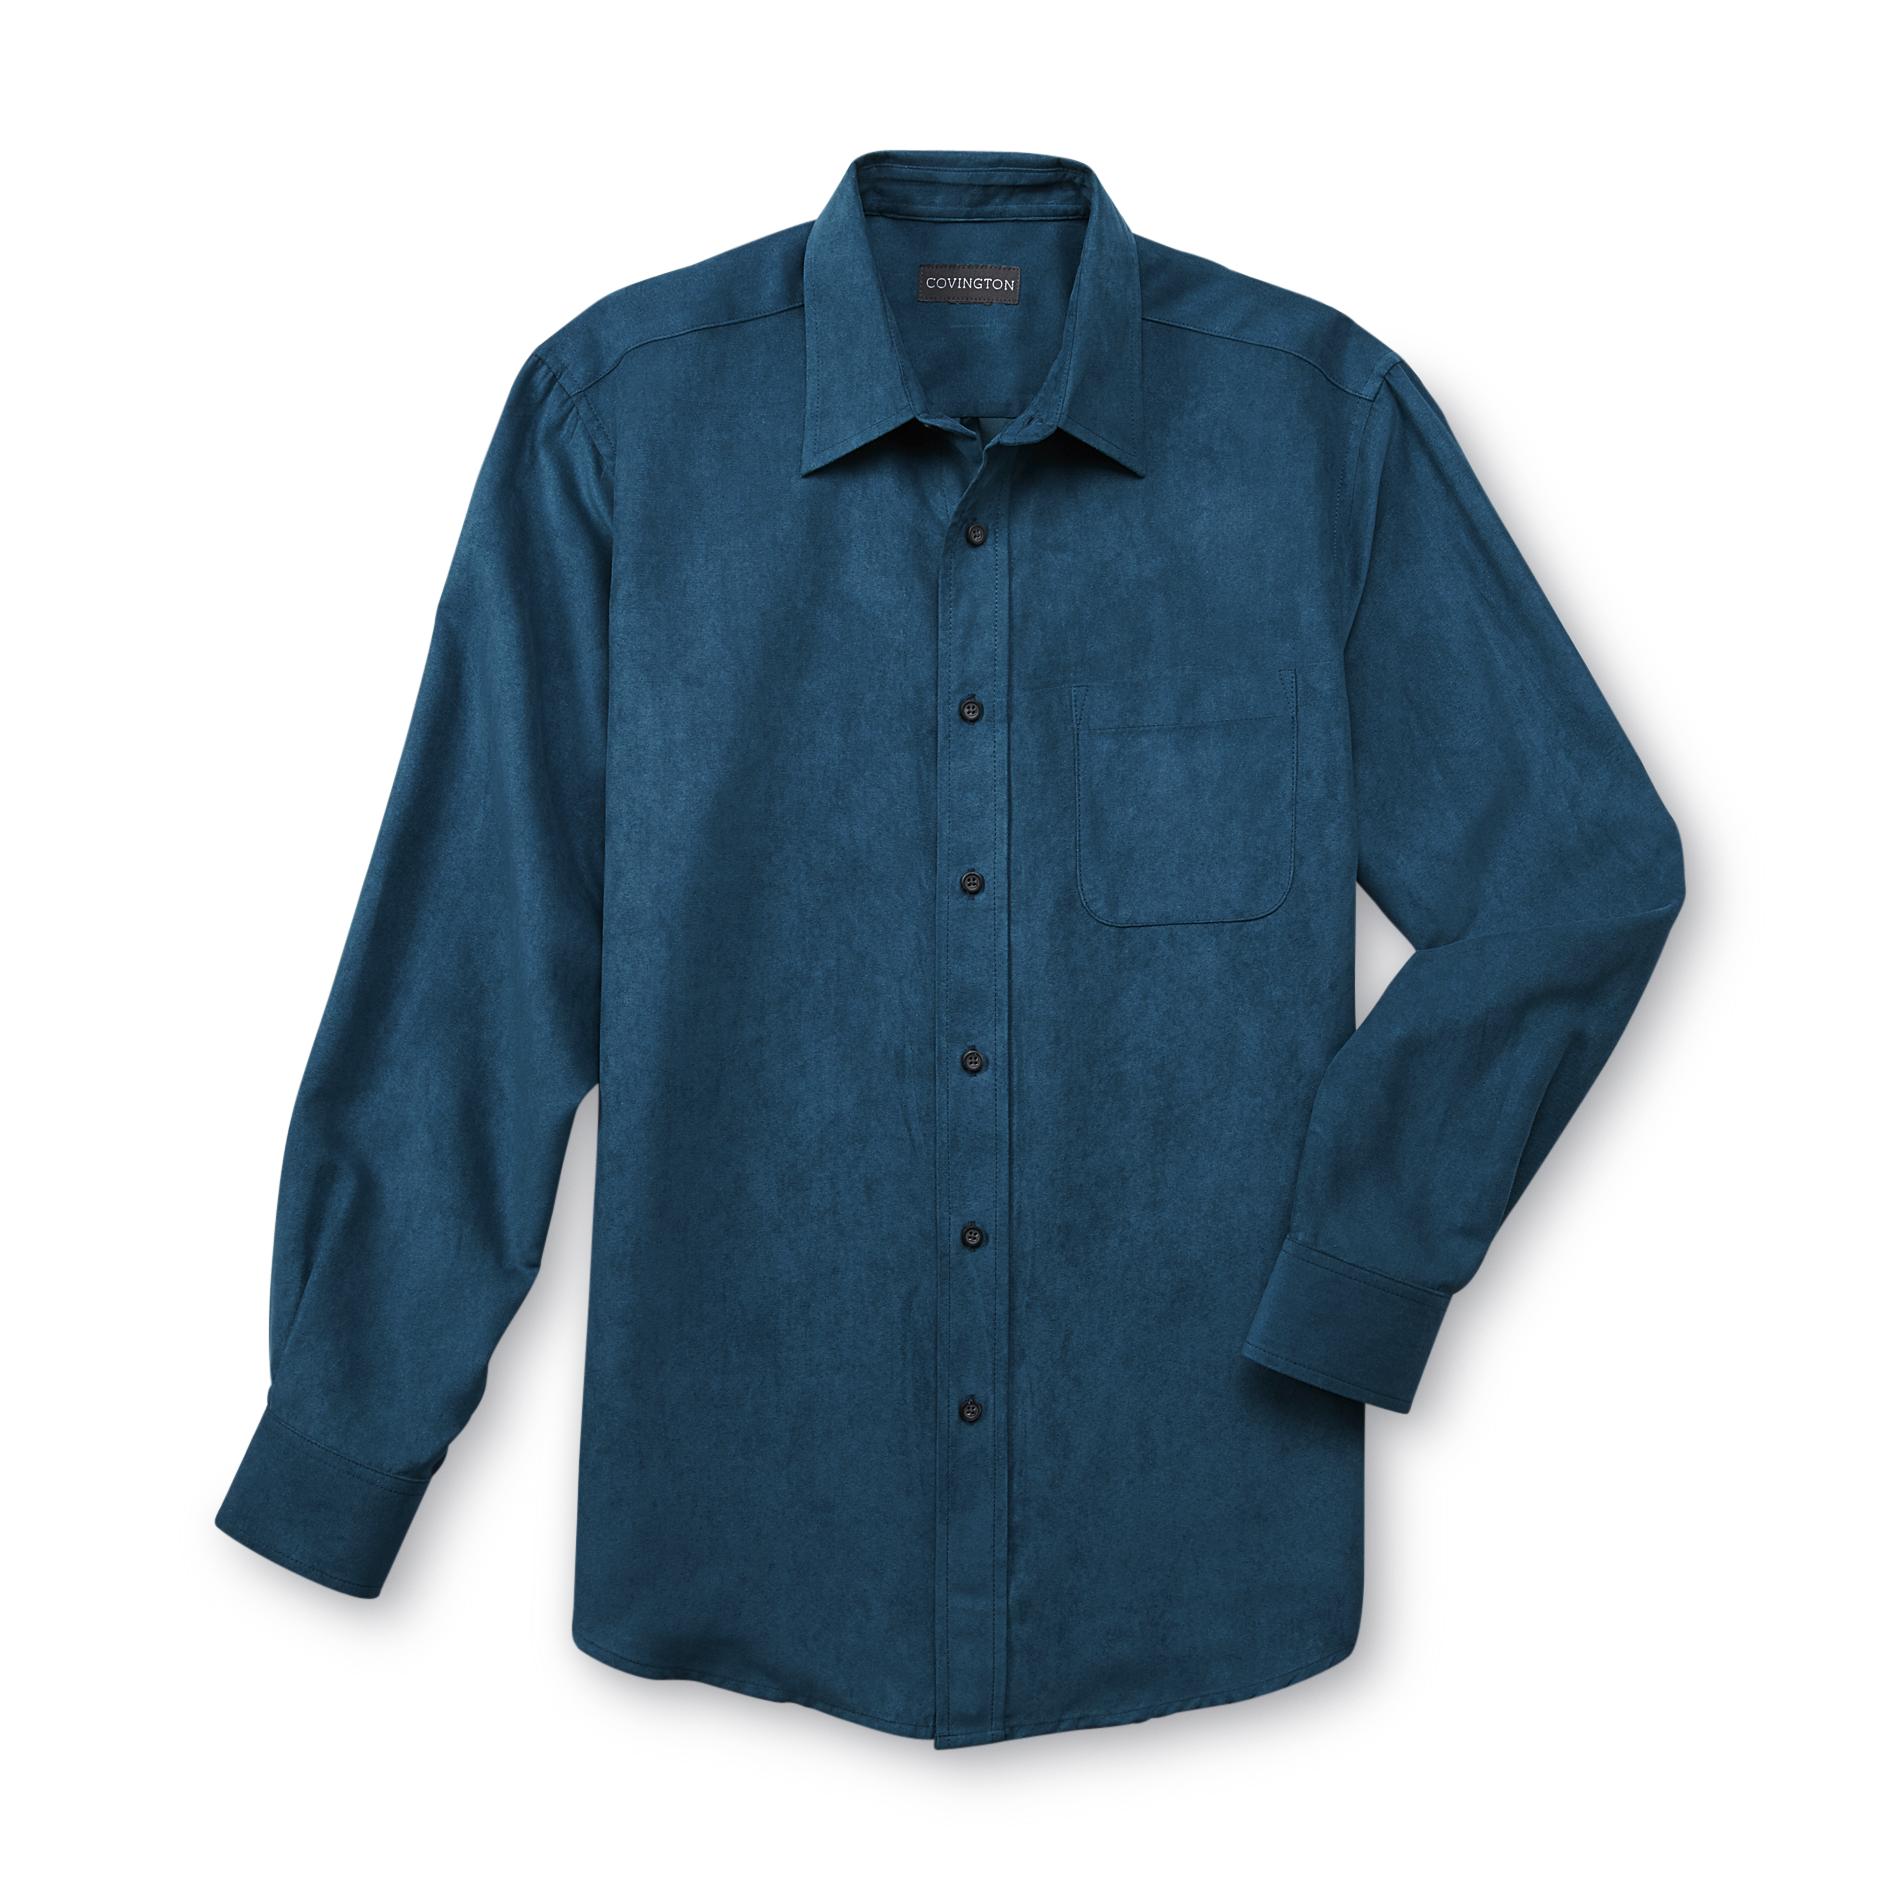 Covington Men's Microsuede Dress Shirt